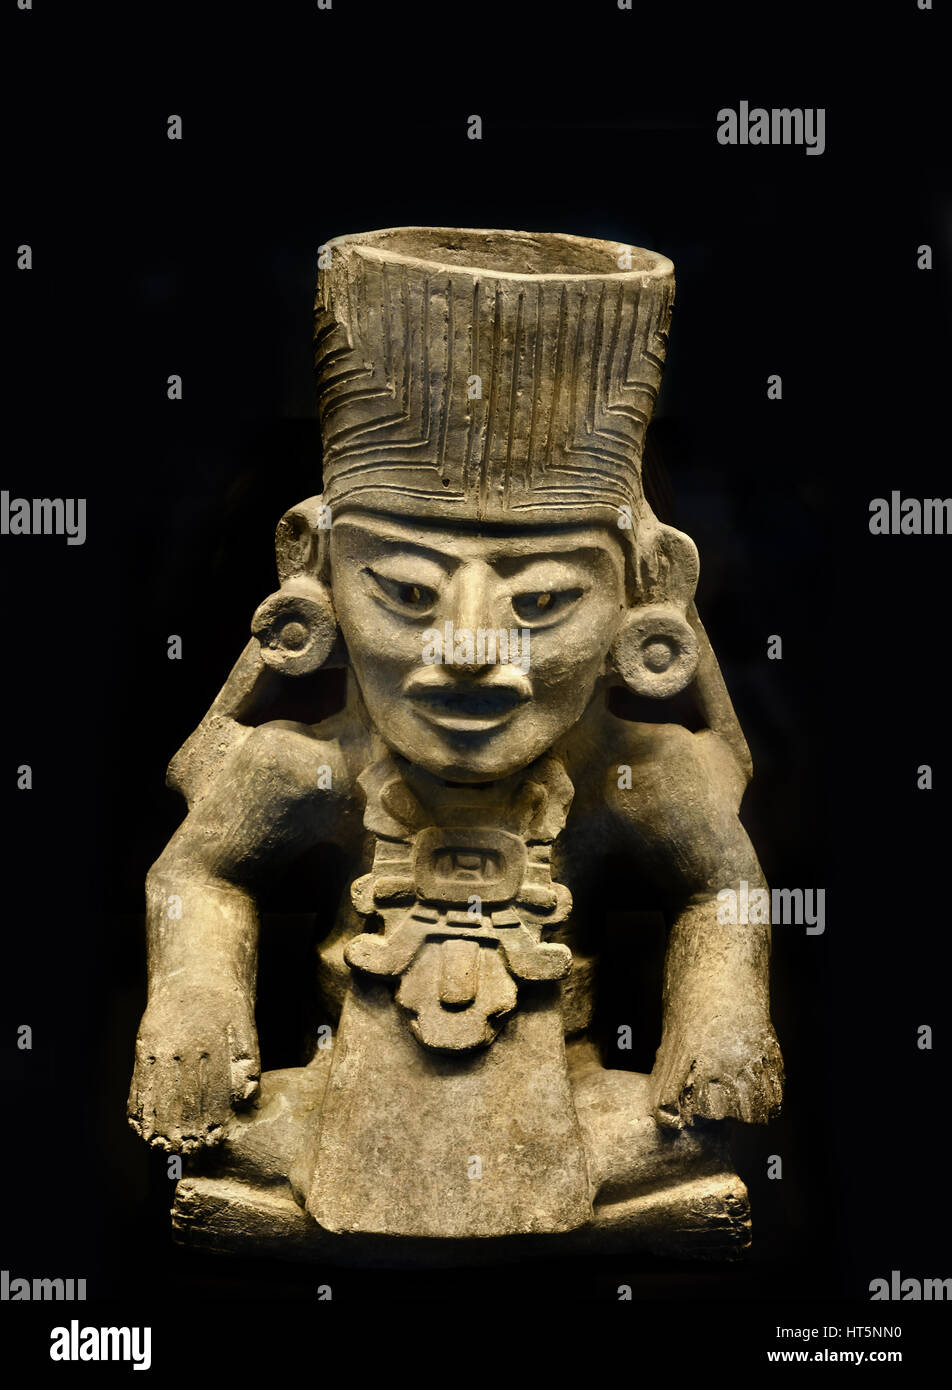 Figur Tontopf Zapoteken (Kultur) American Zapoteken Zivilisation Pre Columbian Mesoamerican Mittelamerika 500 v. Chr. - 900 n. Chr. Stockfoto